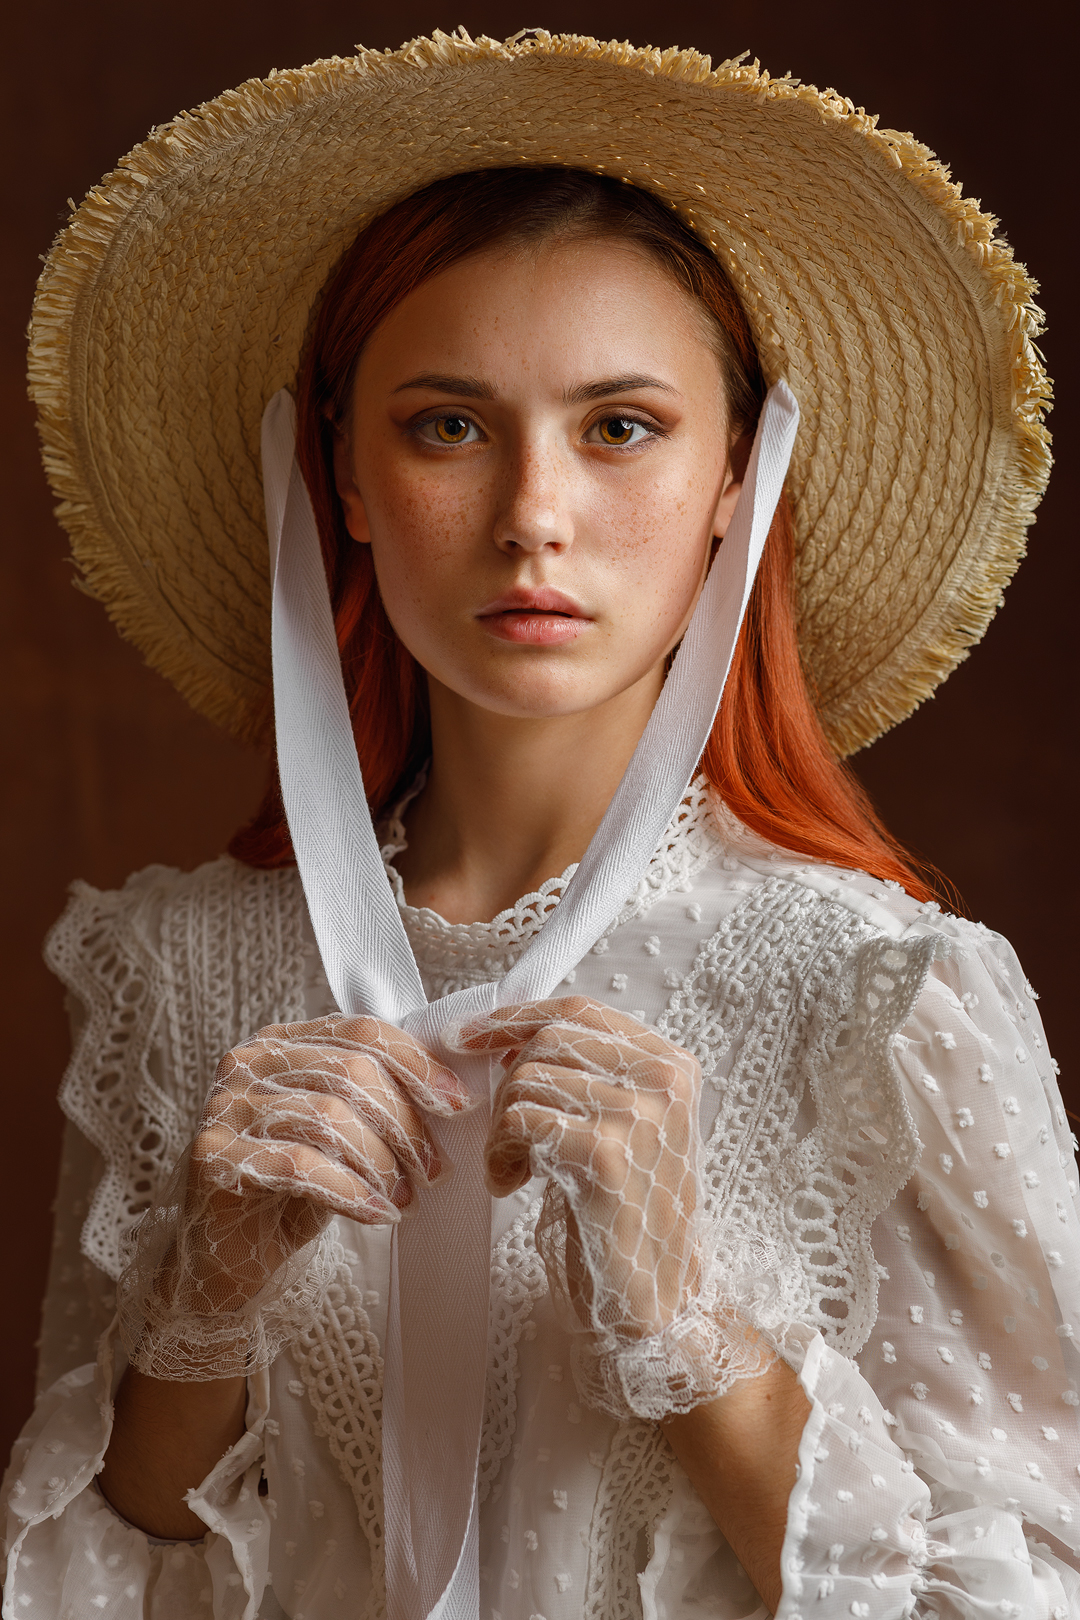 Sergey Sergeev Women Hat Straw Hat Redhead Brown Eyes Looking At Viewer Freckles White Clothing Glov 1080x1620